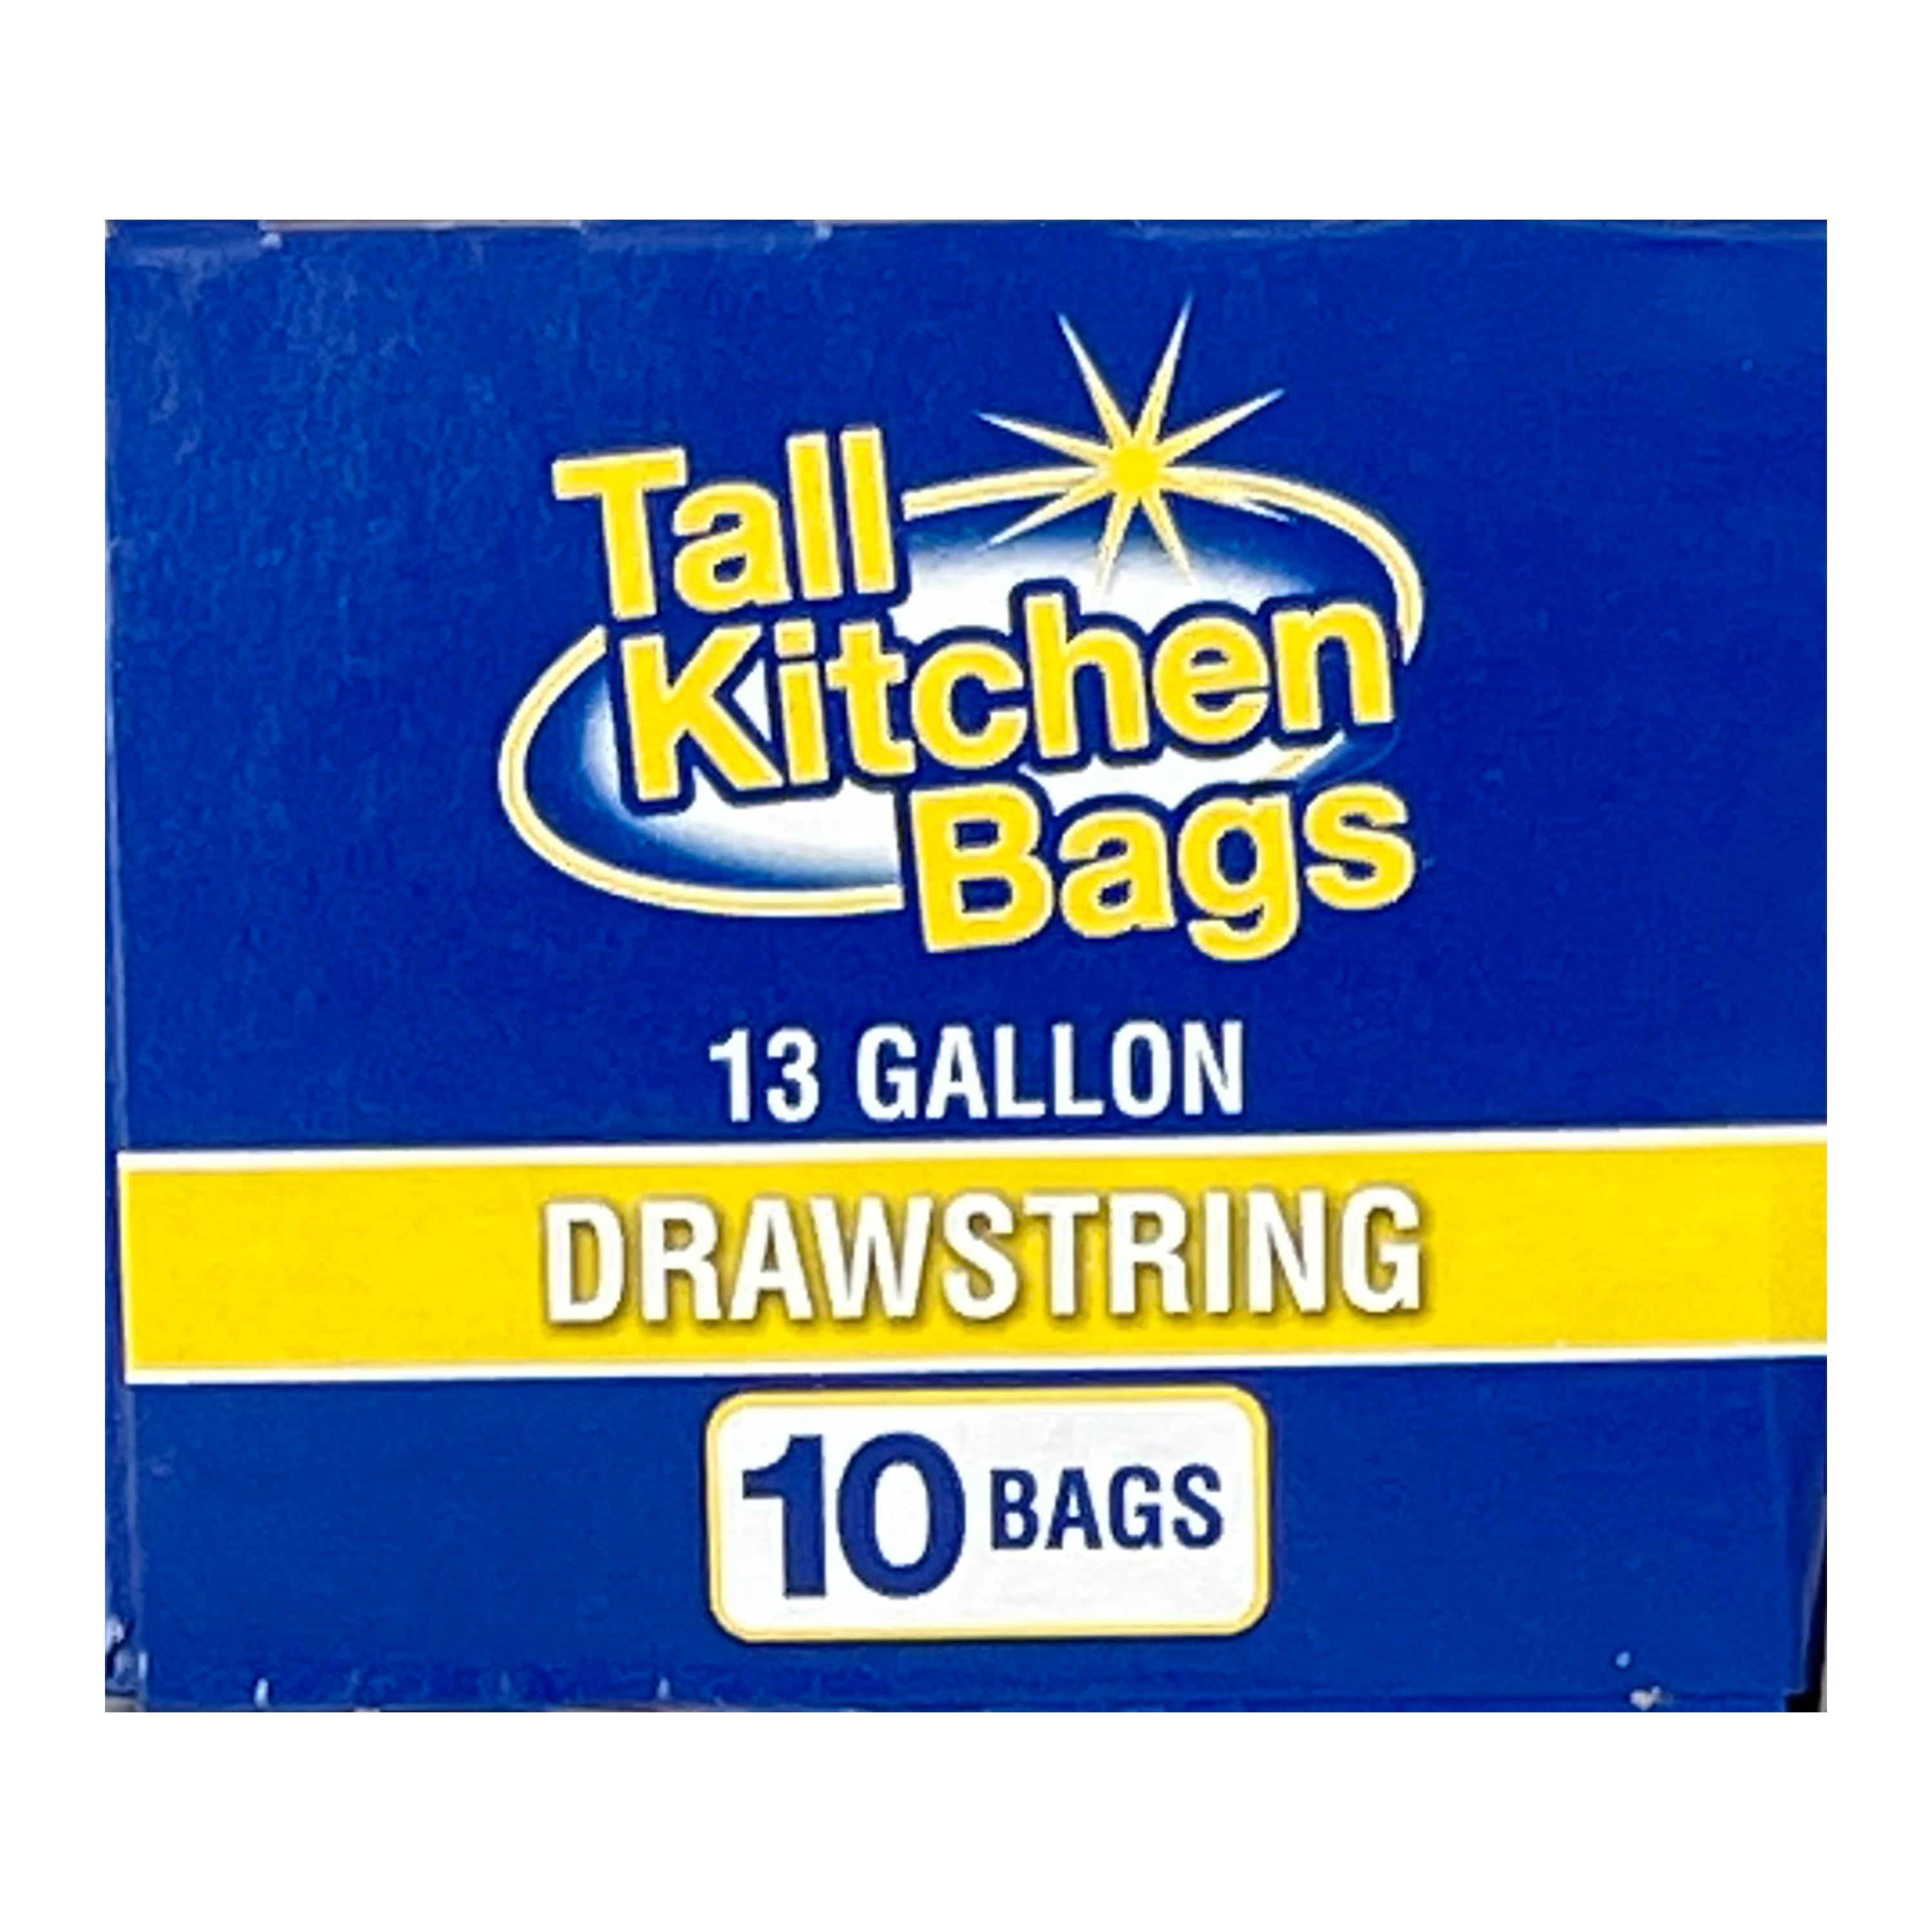 Hefty Basics Tall Kitchen 13 Gallon Drawstring Bags 100 Ct Box